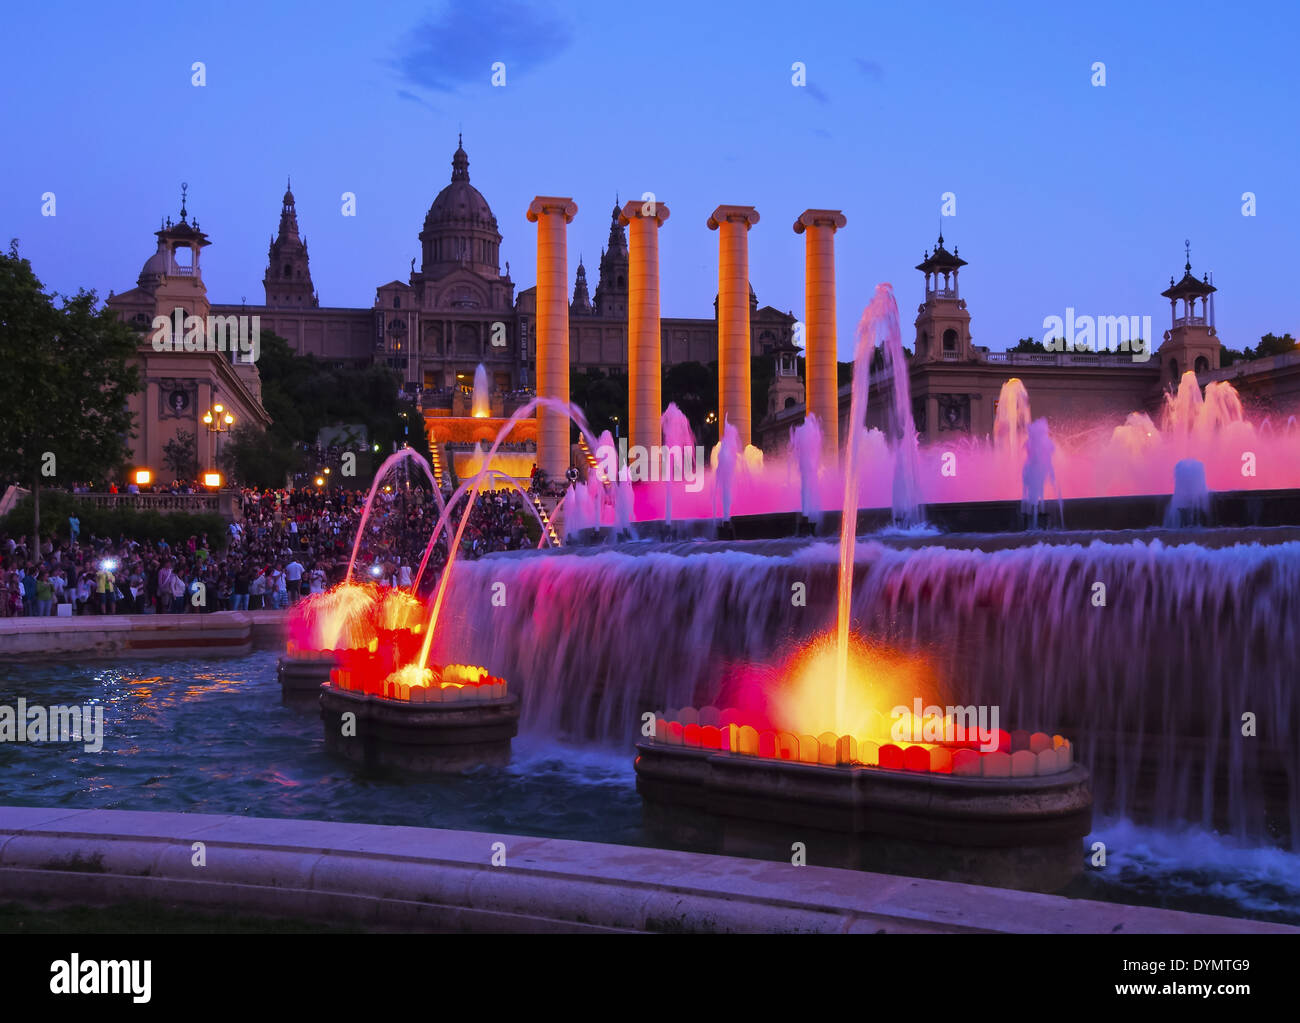 Font Magica de Montjuic - famous fountains in Barcelona, Catalonia, Spain  Stock Photo - Alamy